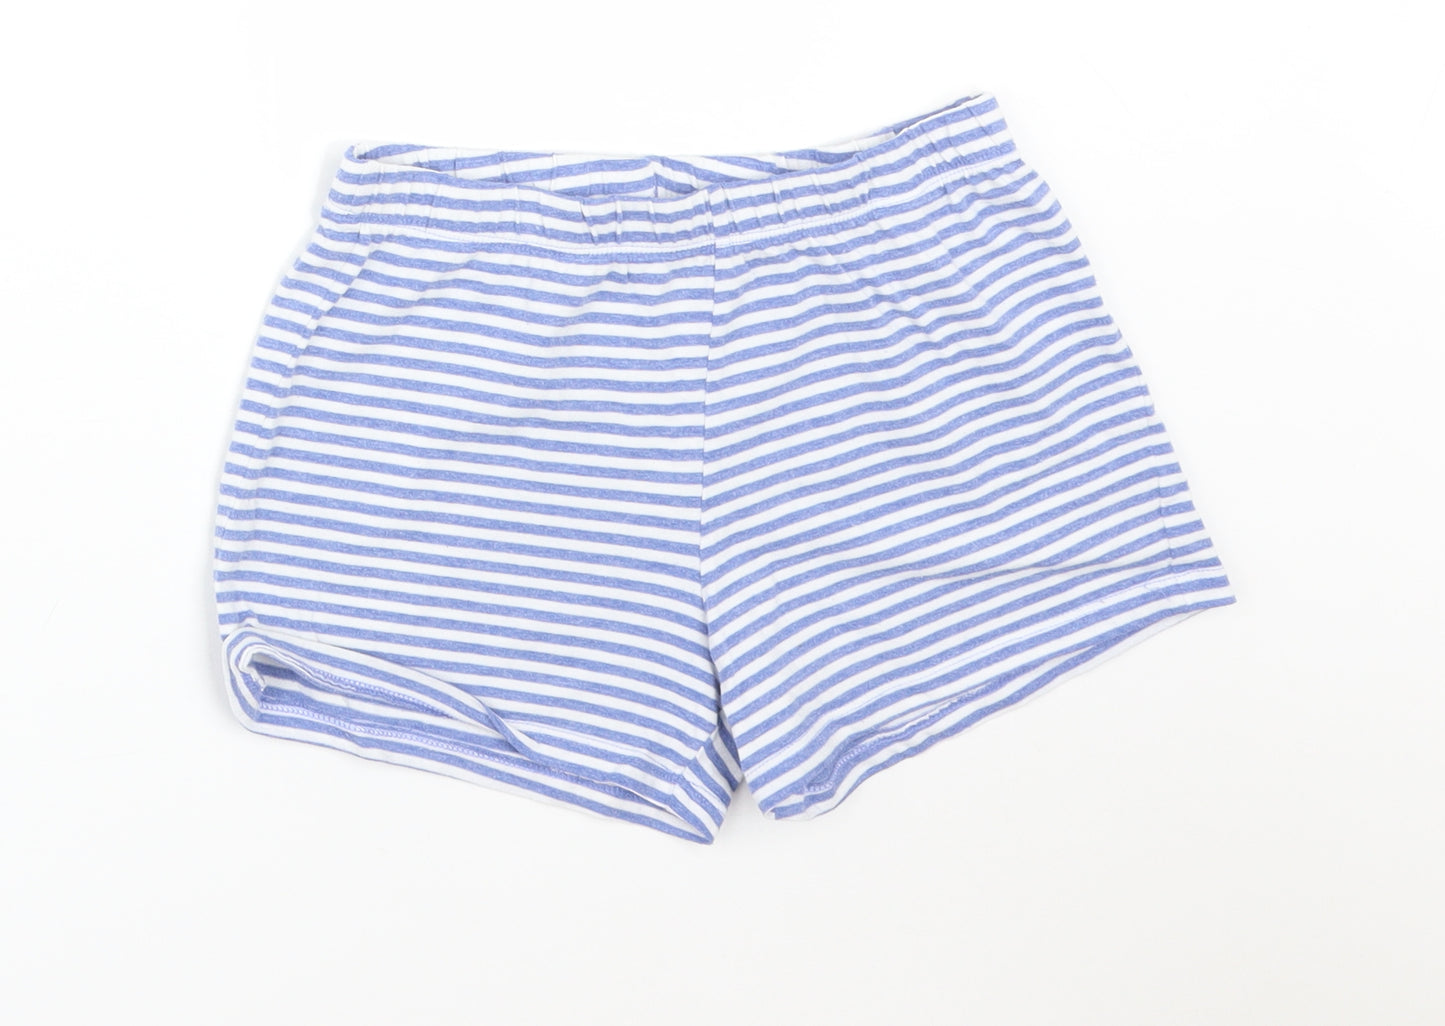 F&F Girls Multicoloured Striped Cotton  Sleep Shorts Size 8-9 Years